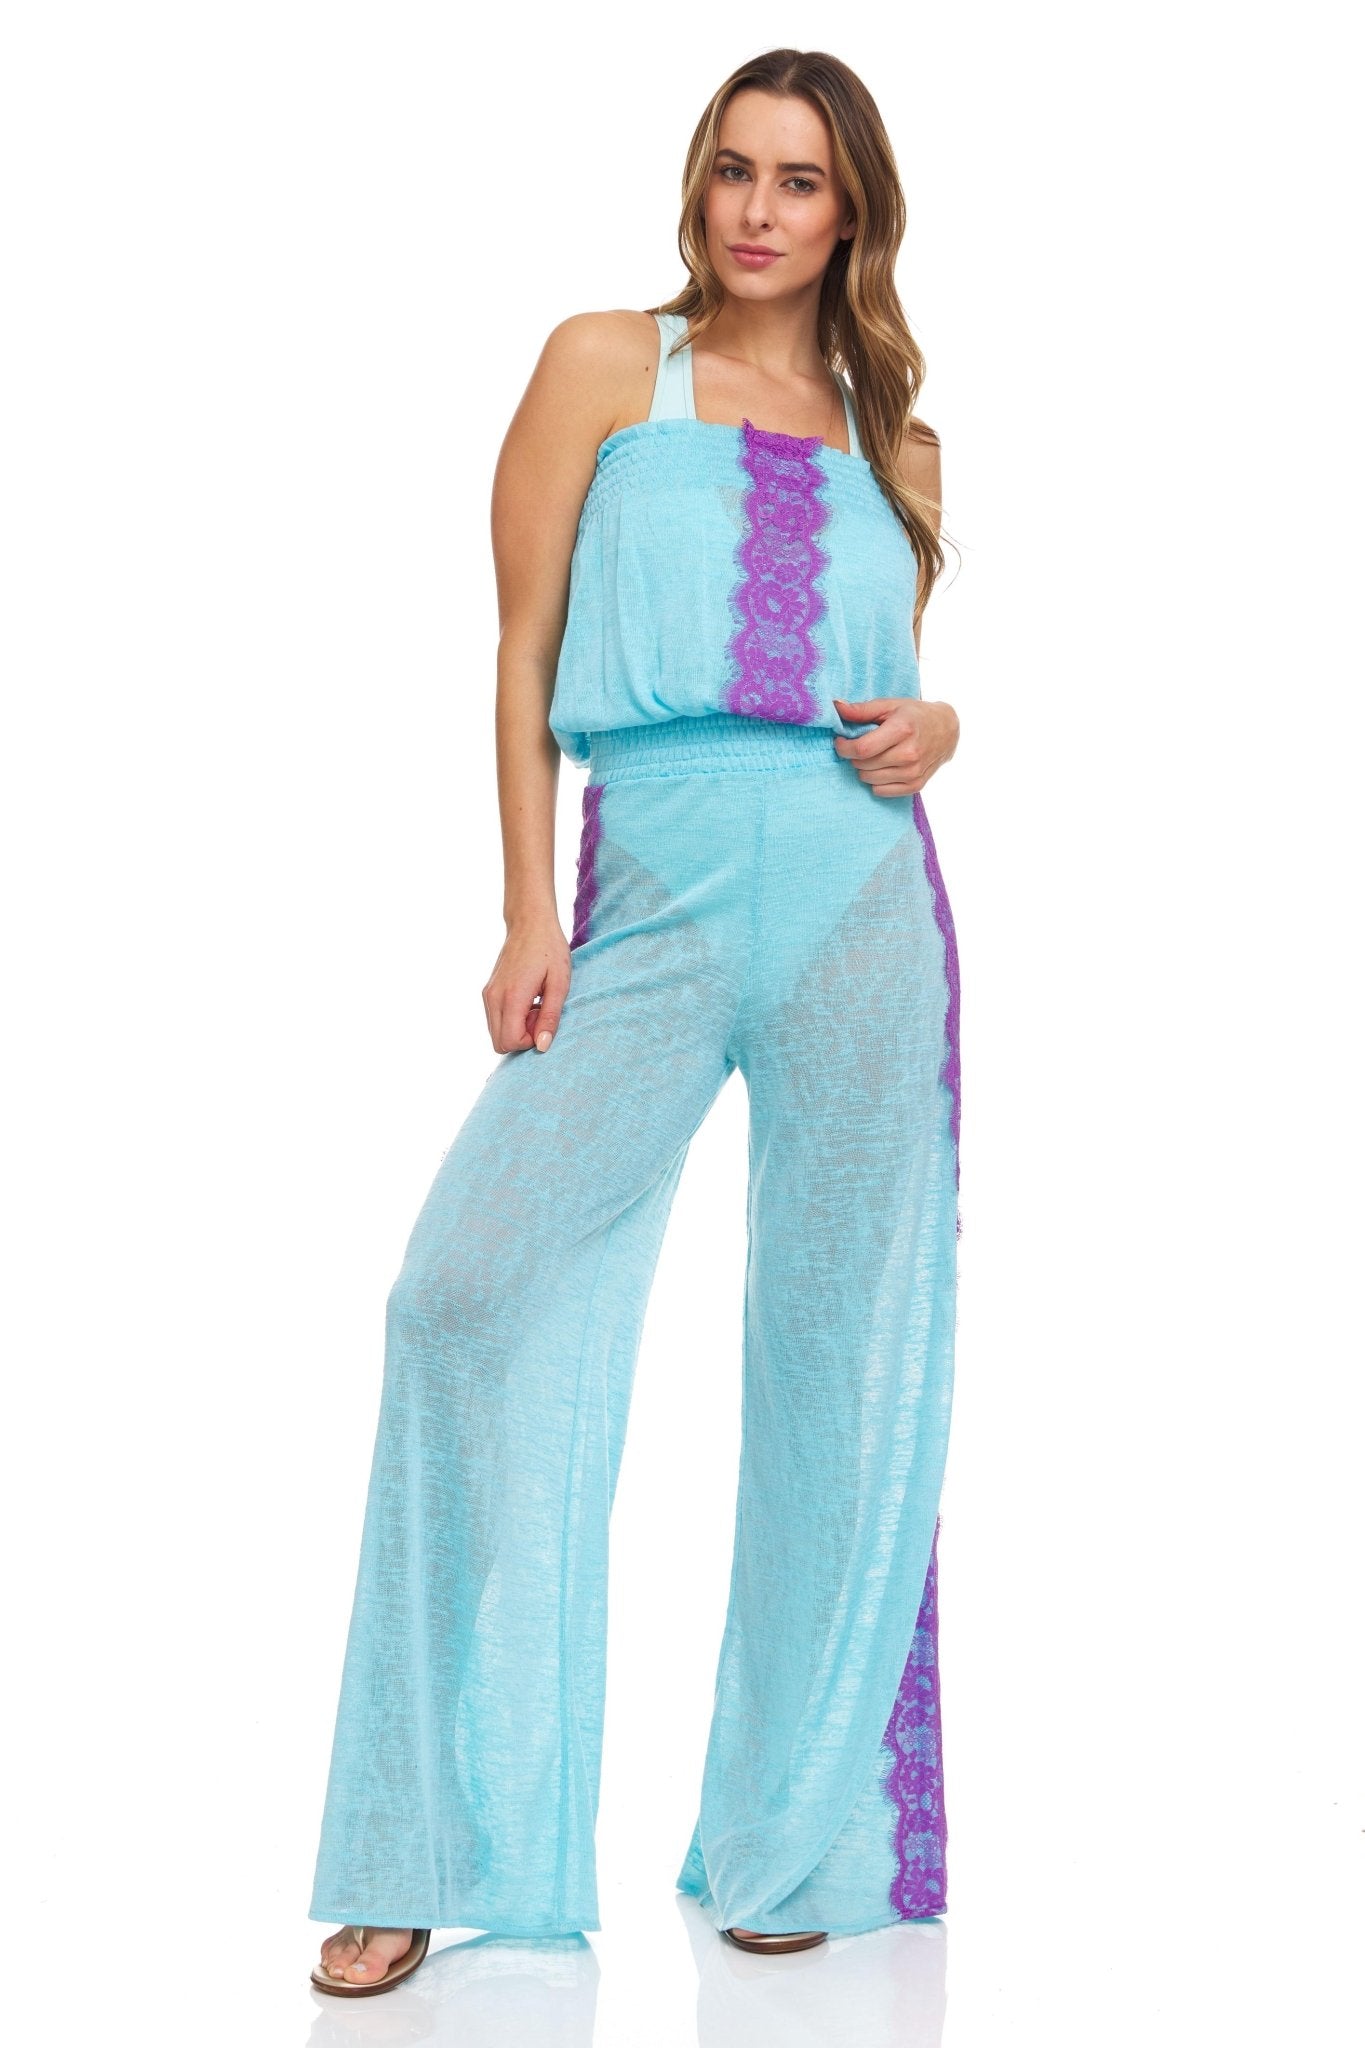 Strapless Lace Trim Jumpsuit - DressbarnJumpsuits & Rompers